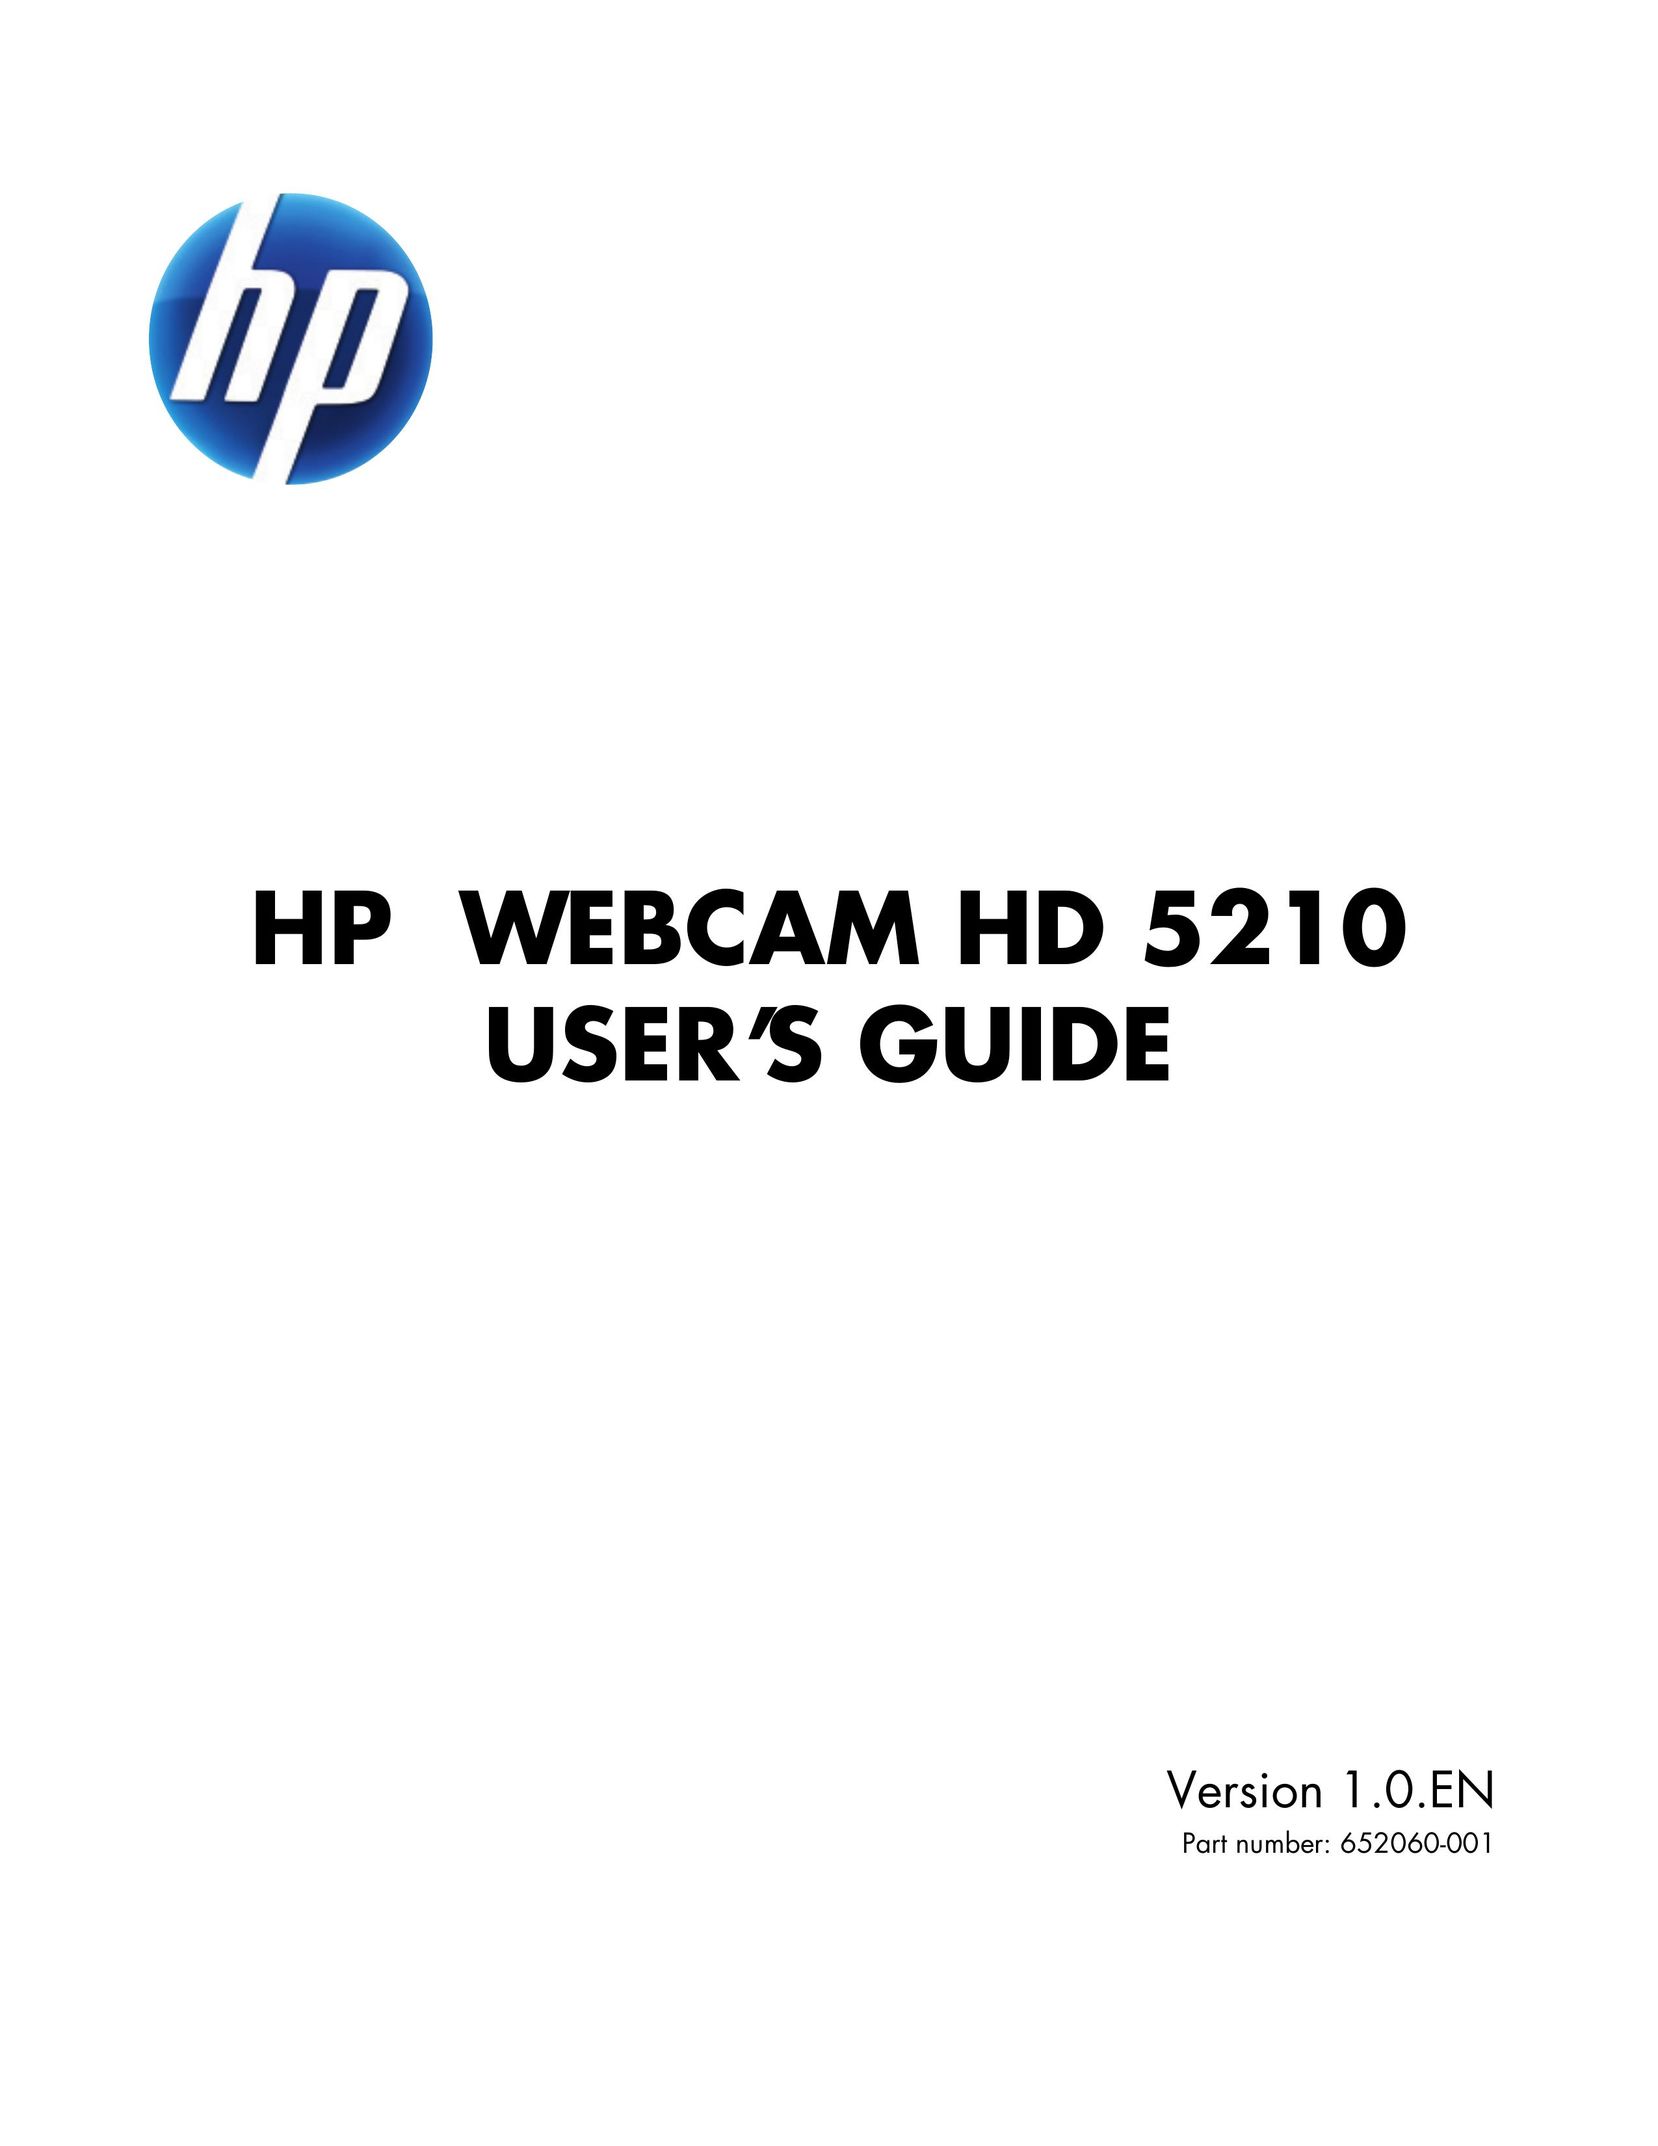 HP (Hewlett-Packard) HD 5210 Webcam User Manual